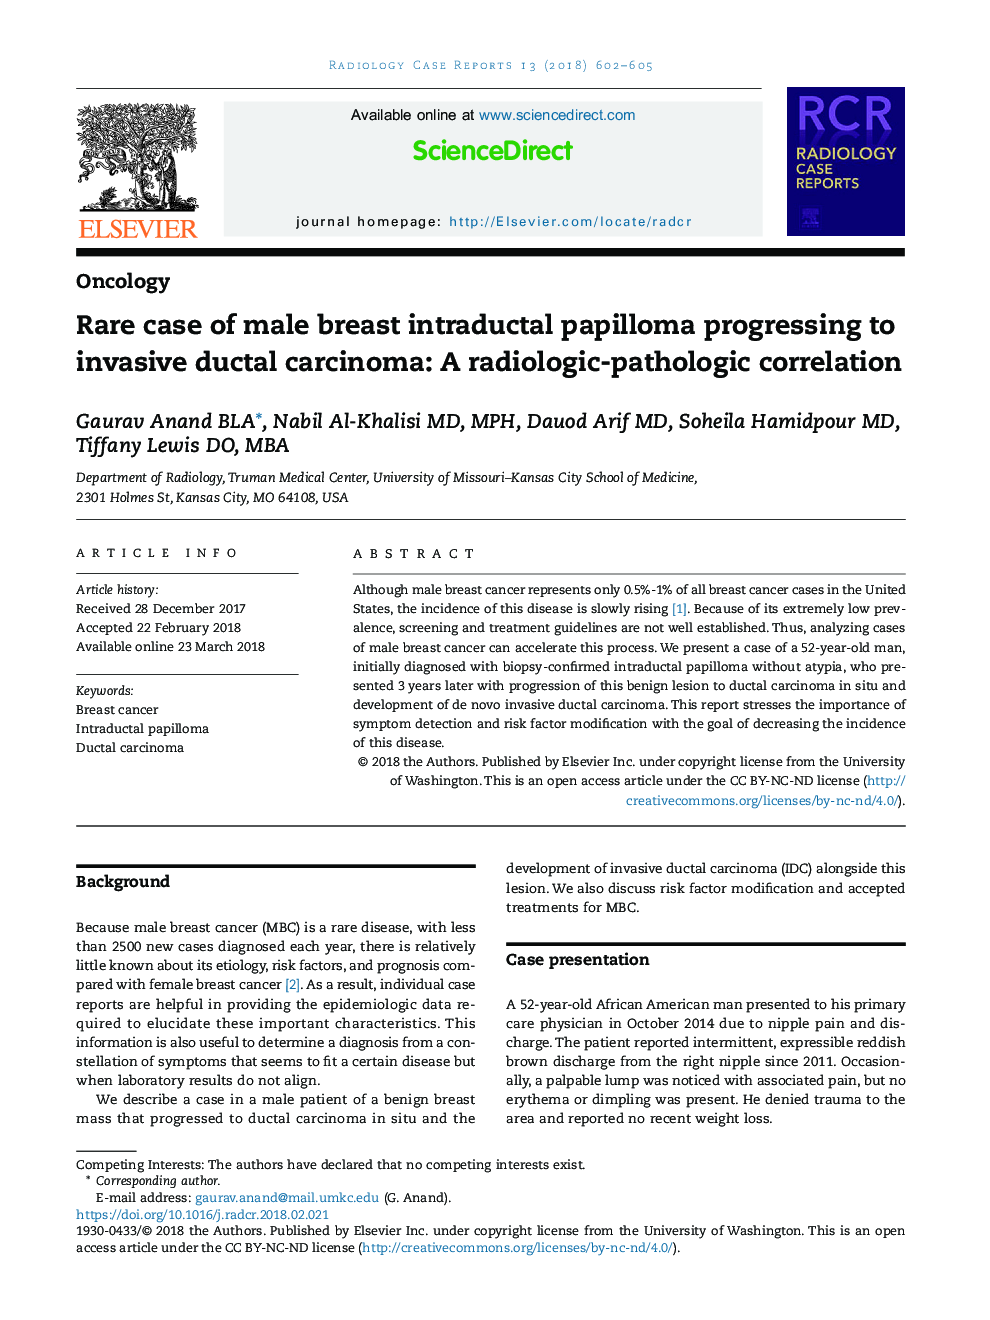 Rare case of male breast intraductal papilloma progressing to invasive ductal carcinoma: A radiologic-pathologic correlation